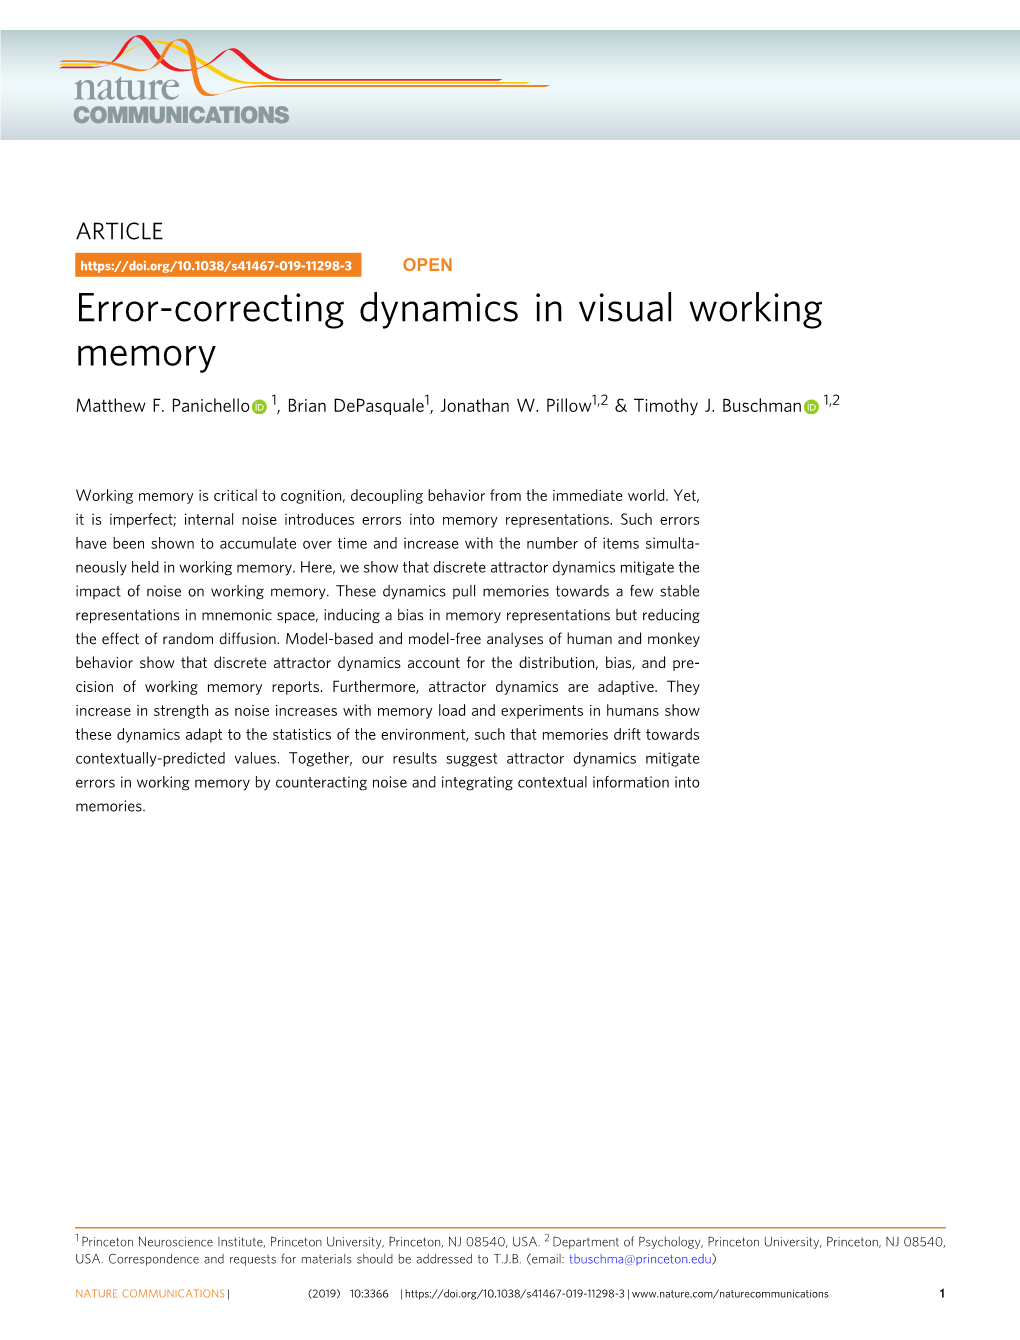 Error-Correcting Dynamics in Visual Working Memory